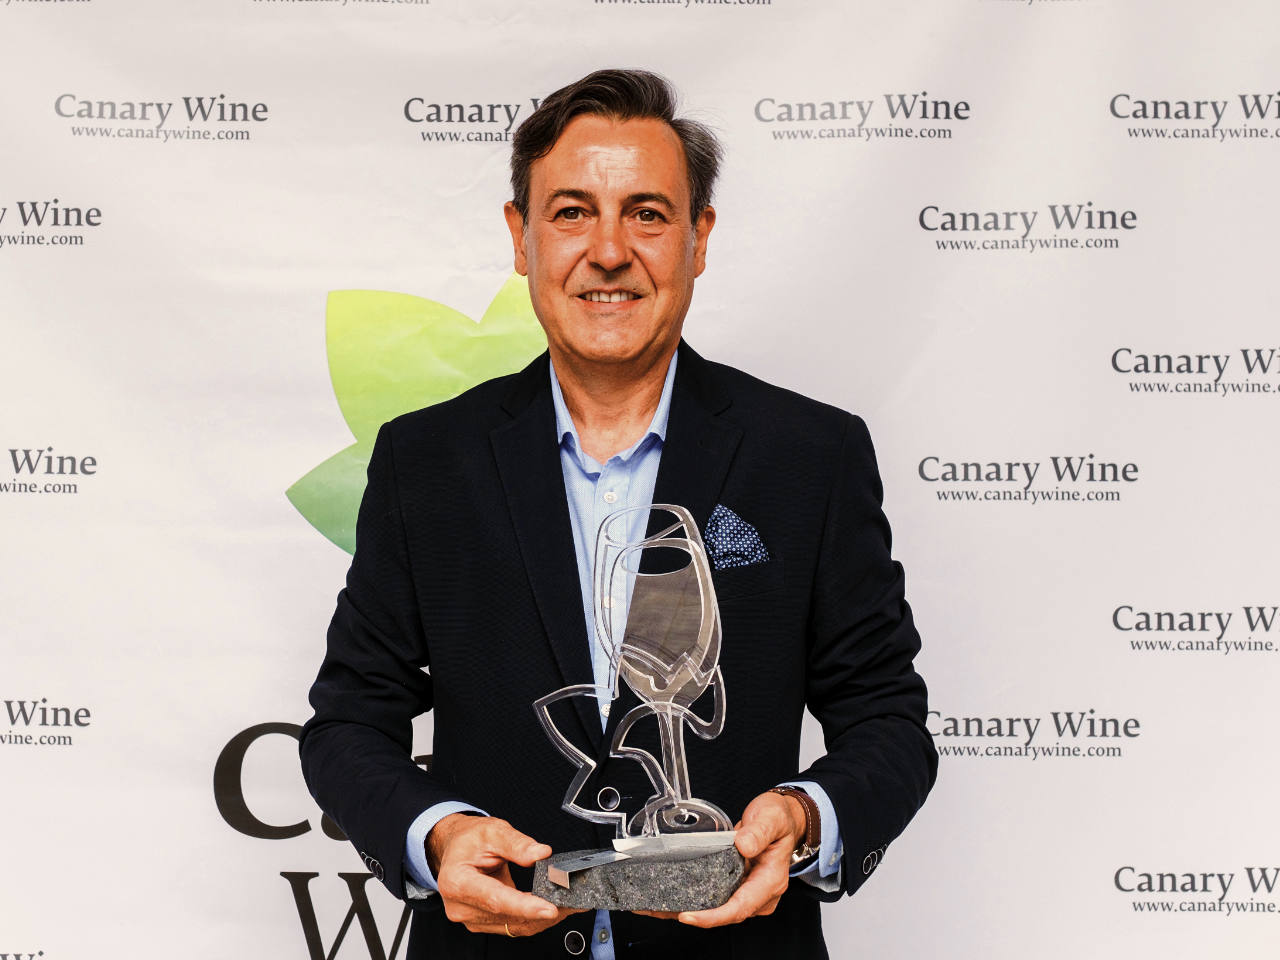 Canary Wine appoints José Ribagorda ambassador of its wines